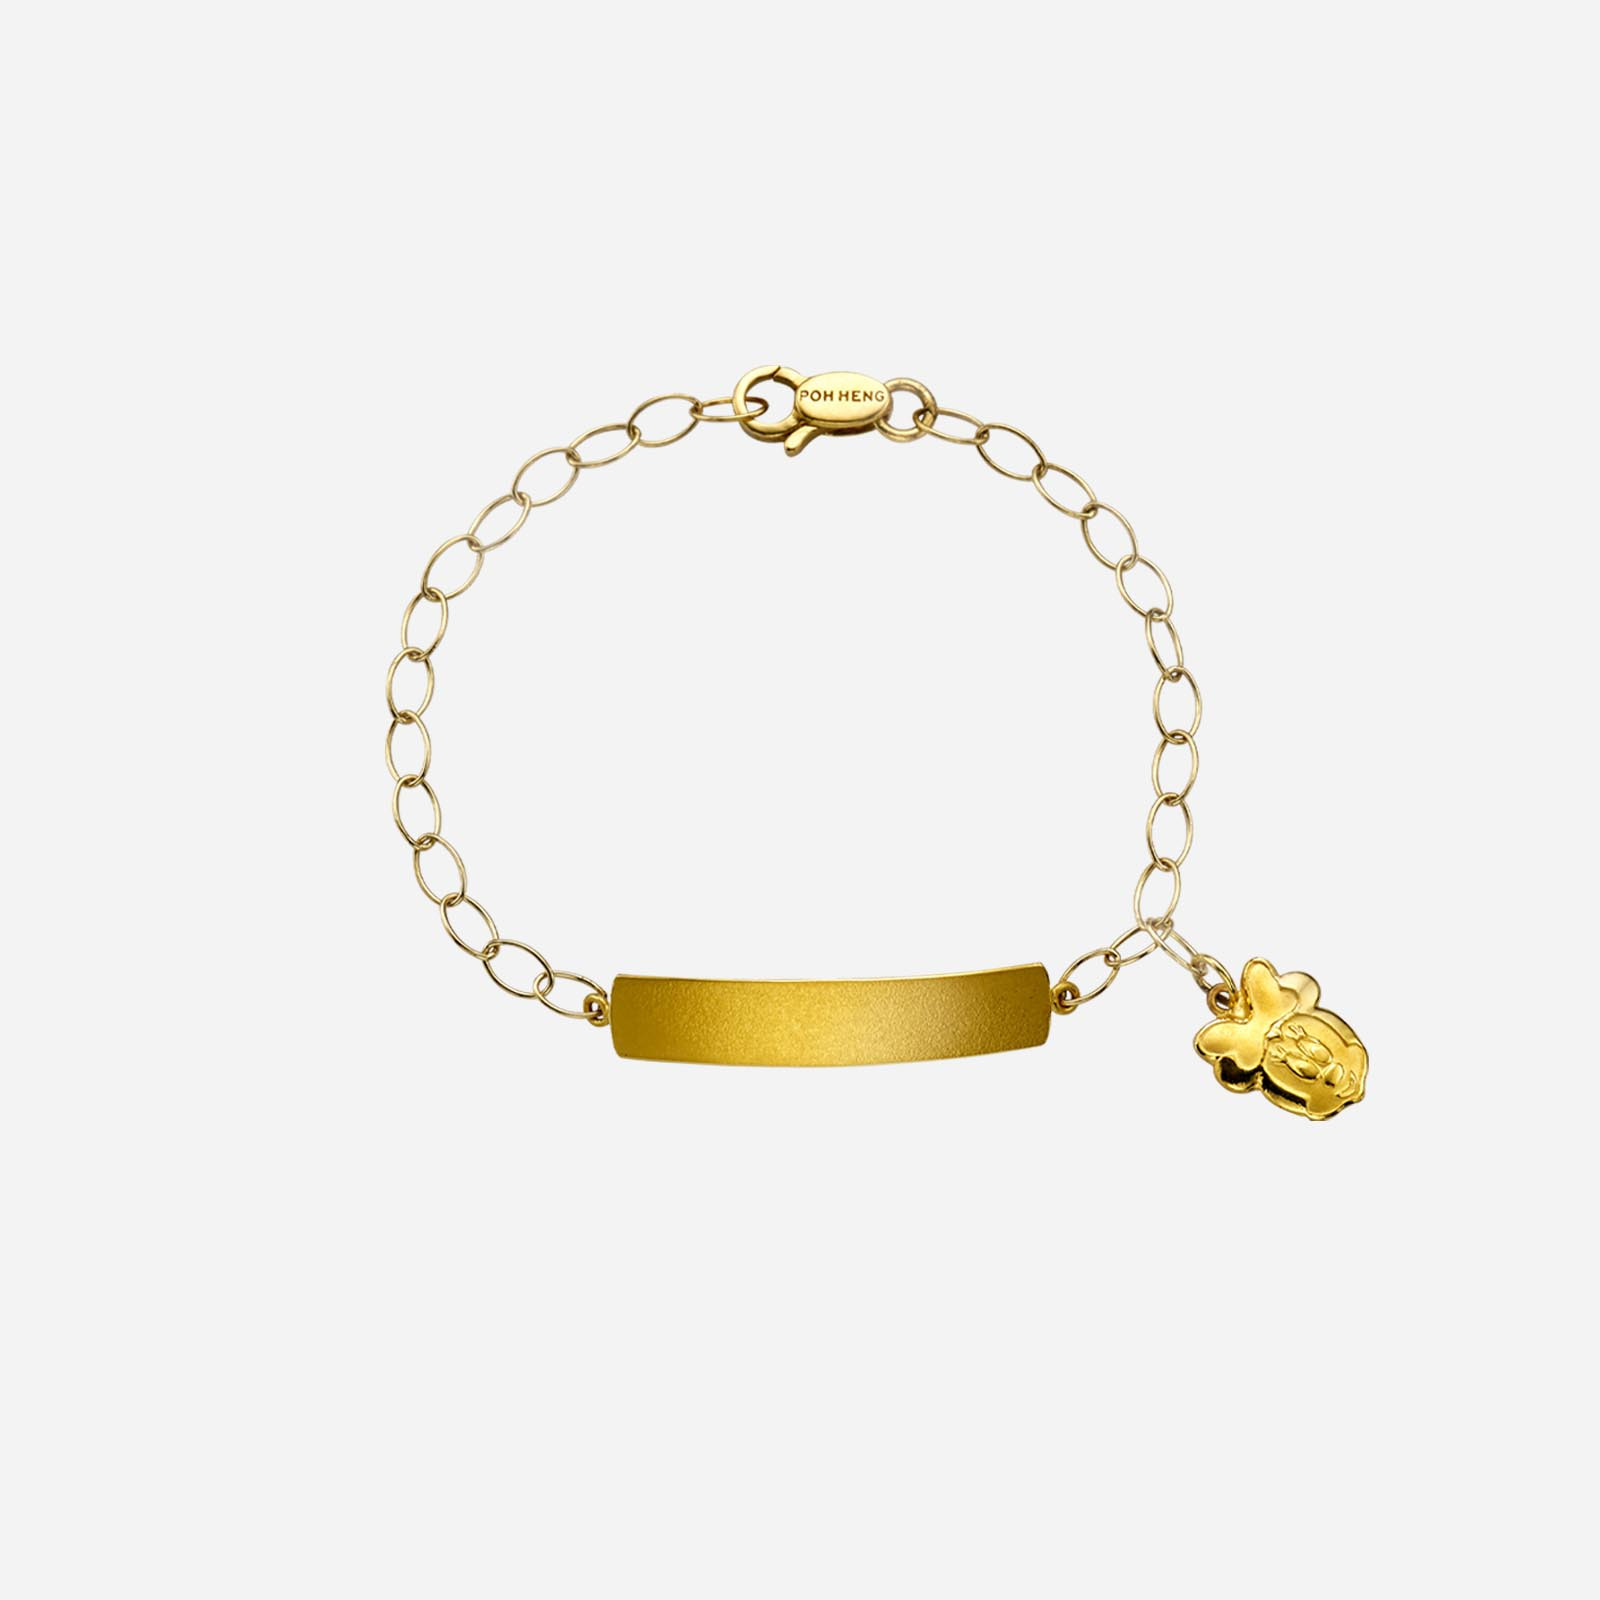 Poh Heng Disney Baby Minnie Name Bracelet in 22K Yellow Gold	